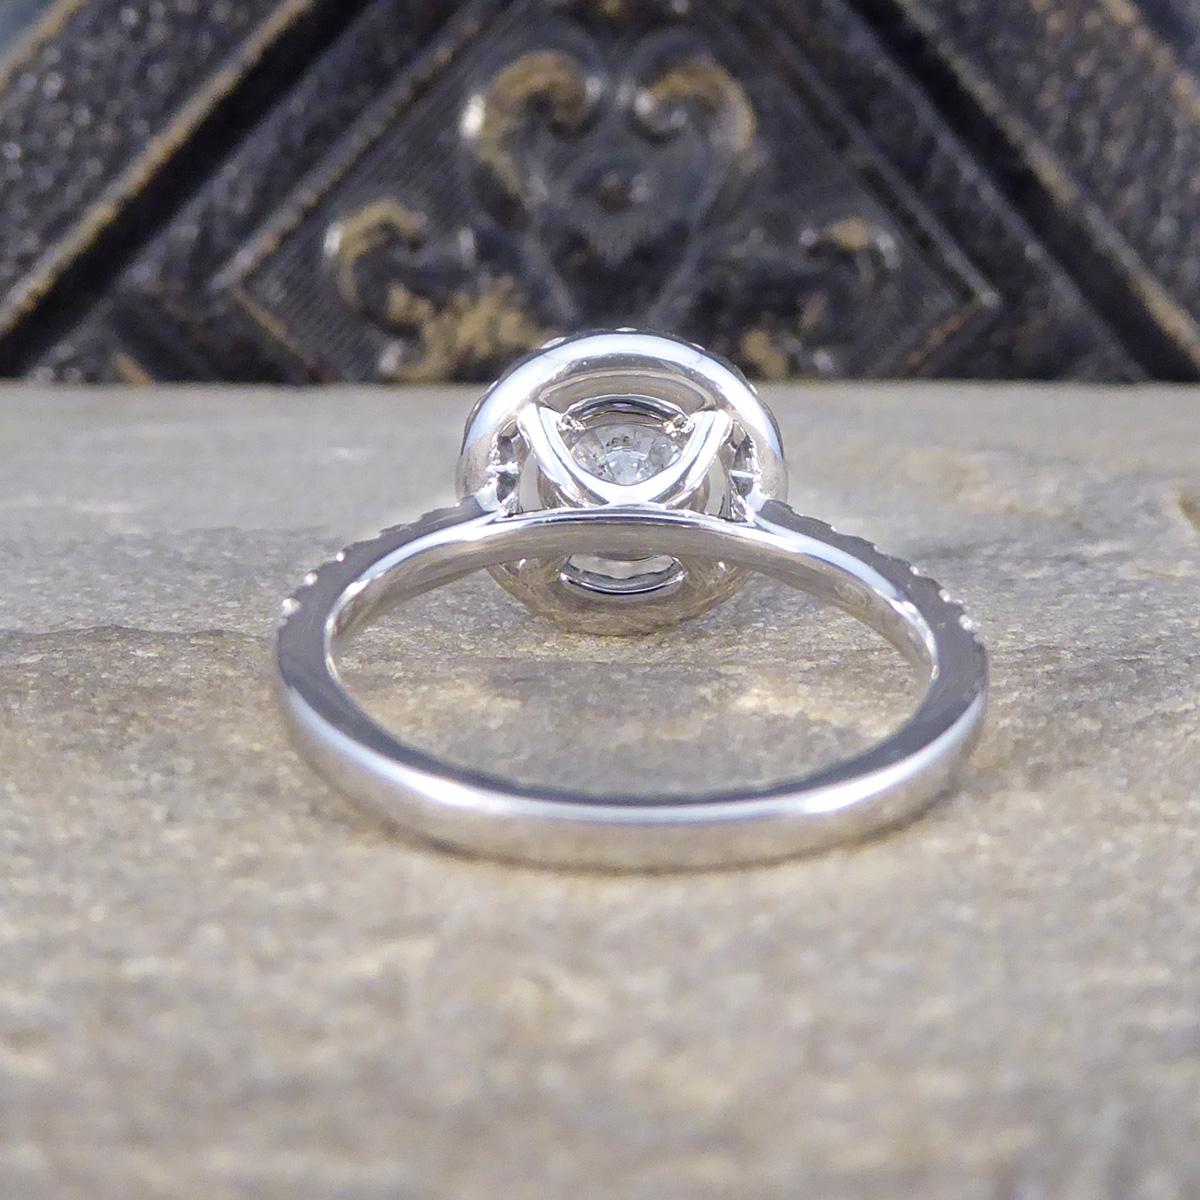 Brilliant Cut 1.78ct Diamond Halo Cluster Ring in Platinum For Sale